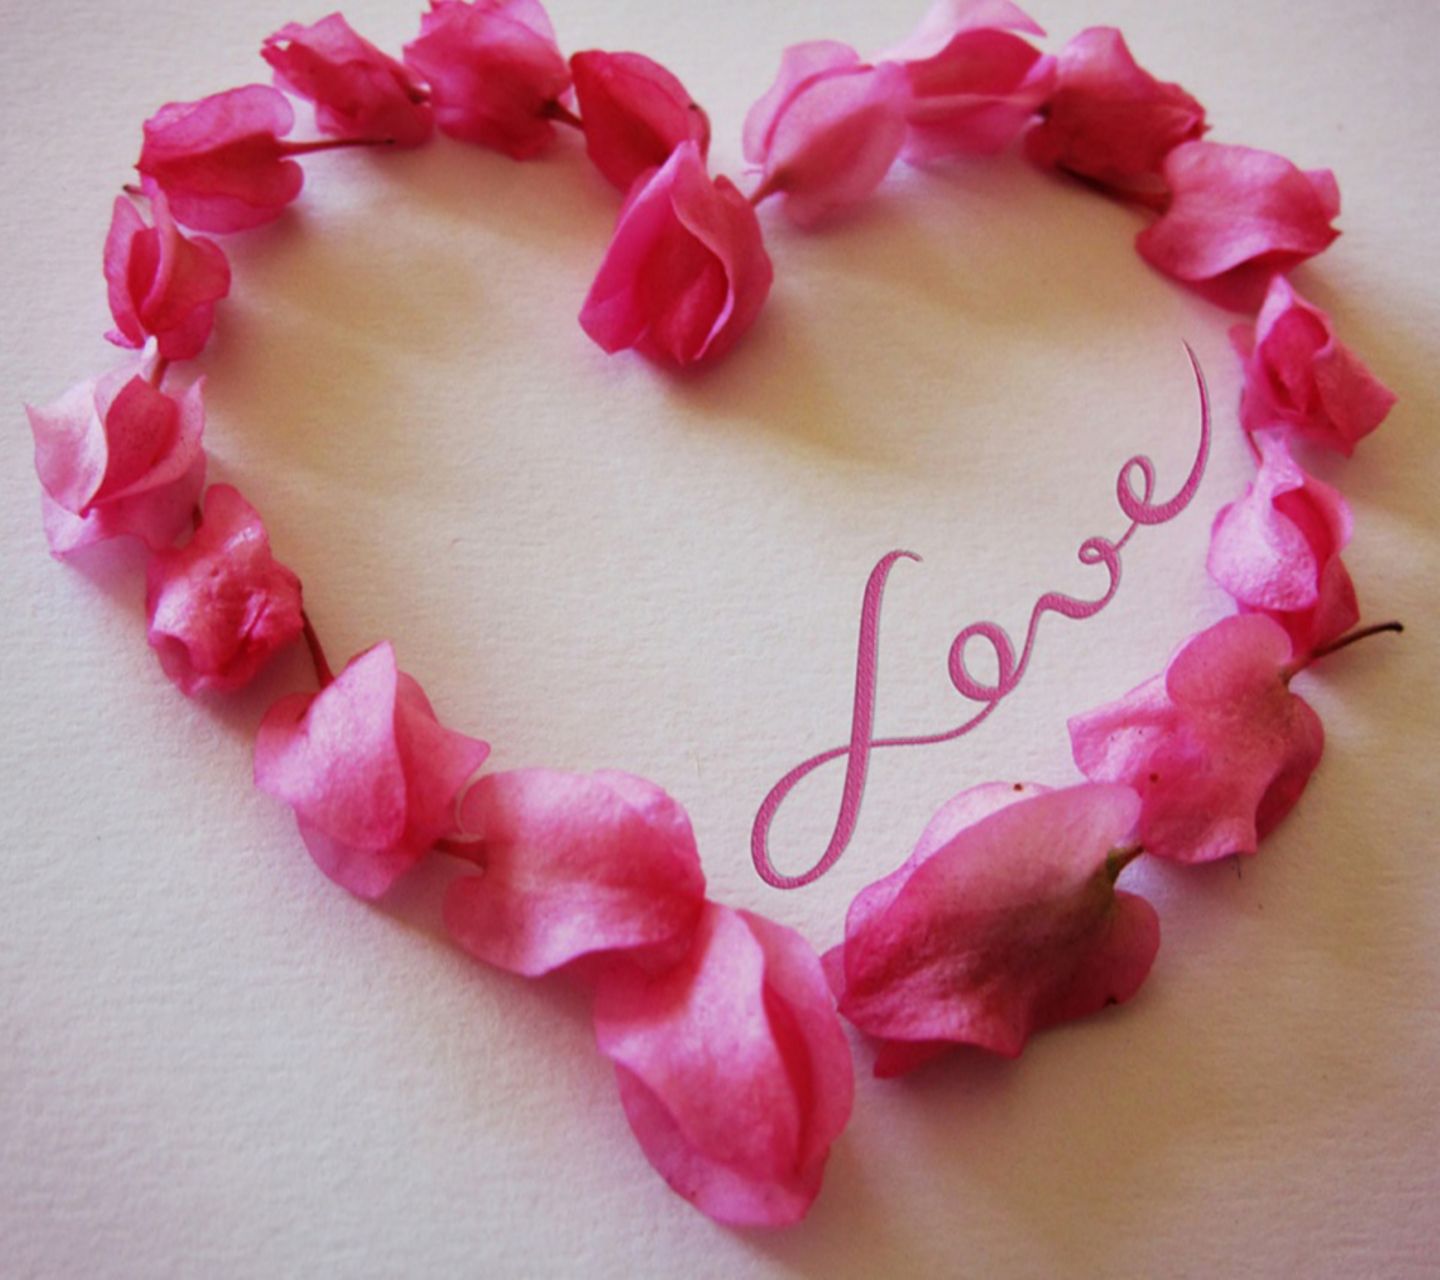 dil wallpaper download,pink,heart,petal,love,fashion accessory